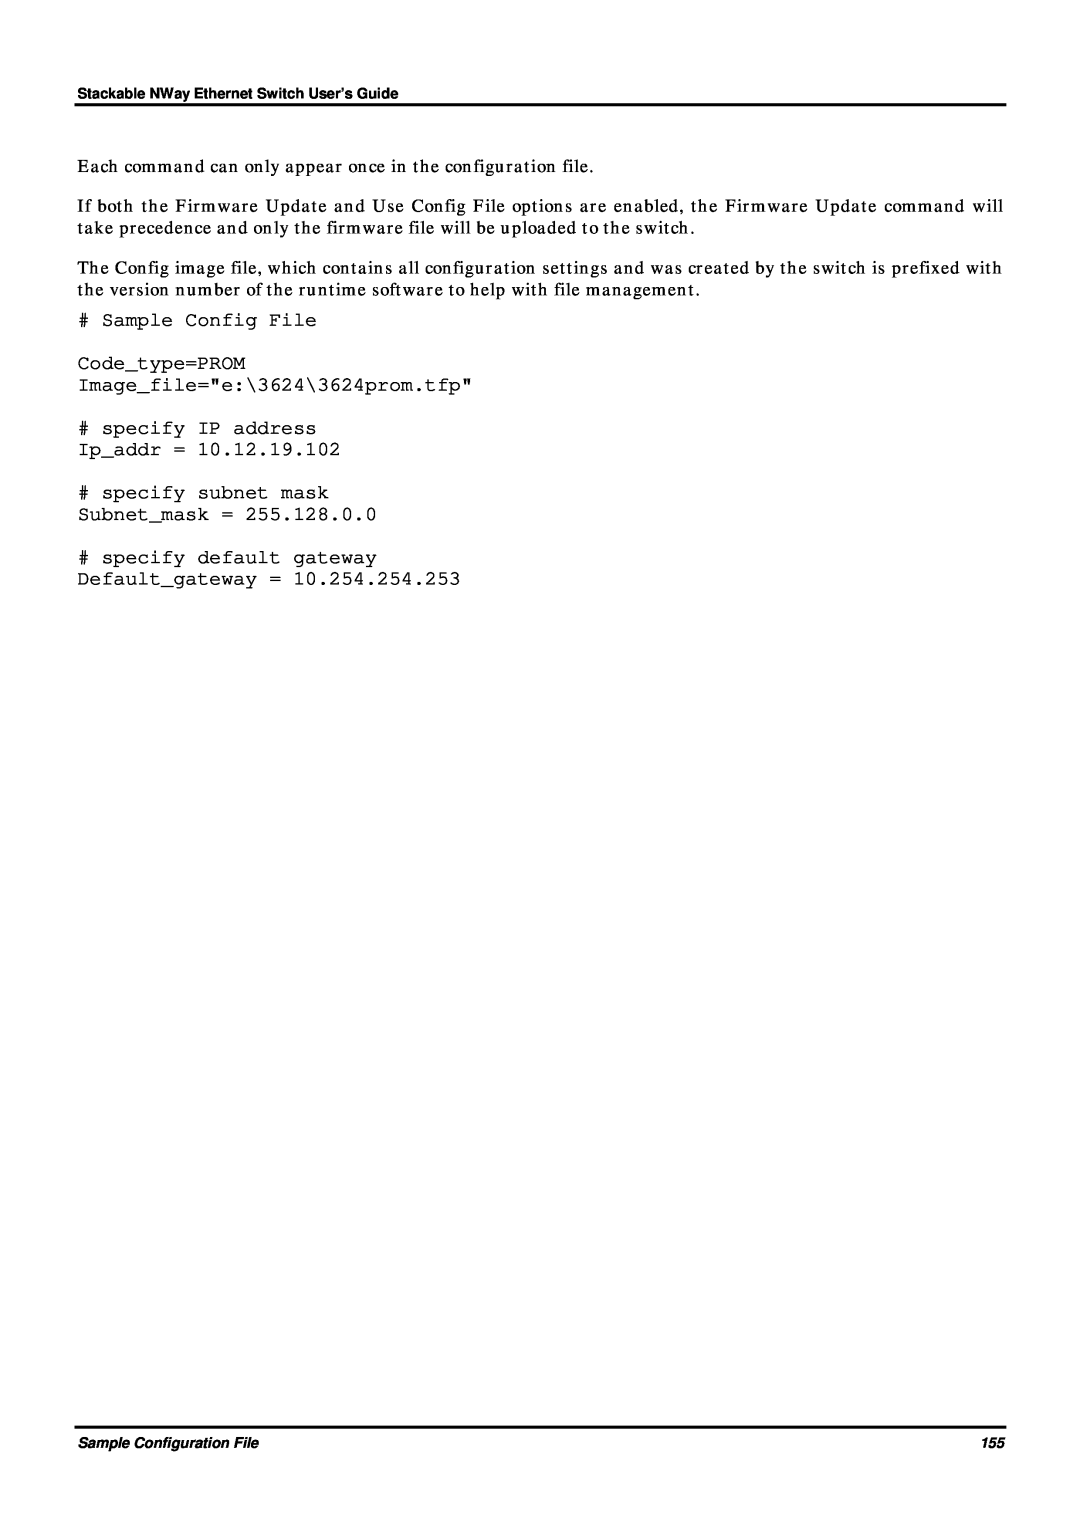 D-Link DES-3624 manual # Sample Config File Codetype=PROM Imagefile=e\3624\3624prom.tfp 